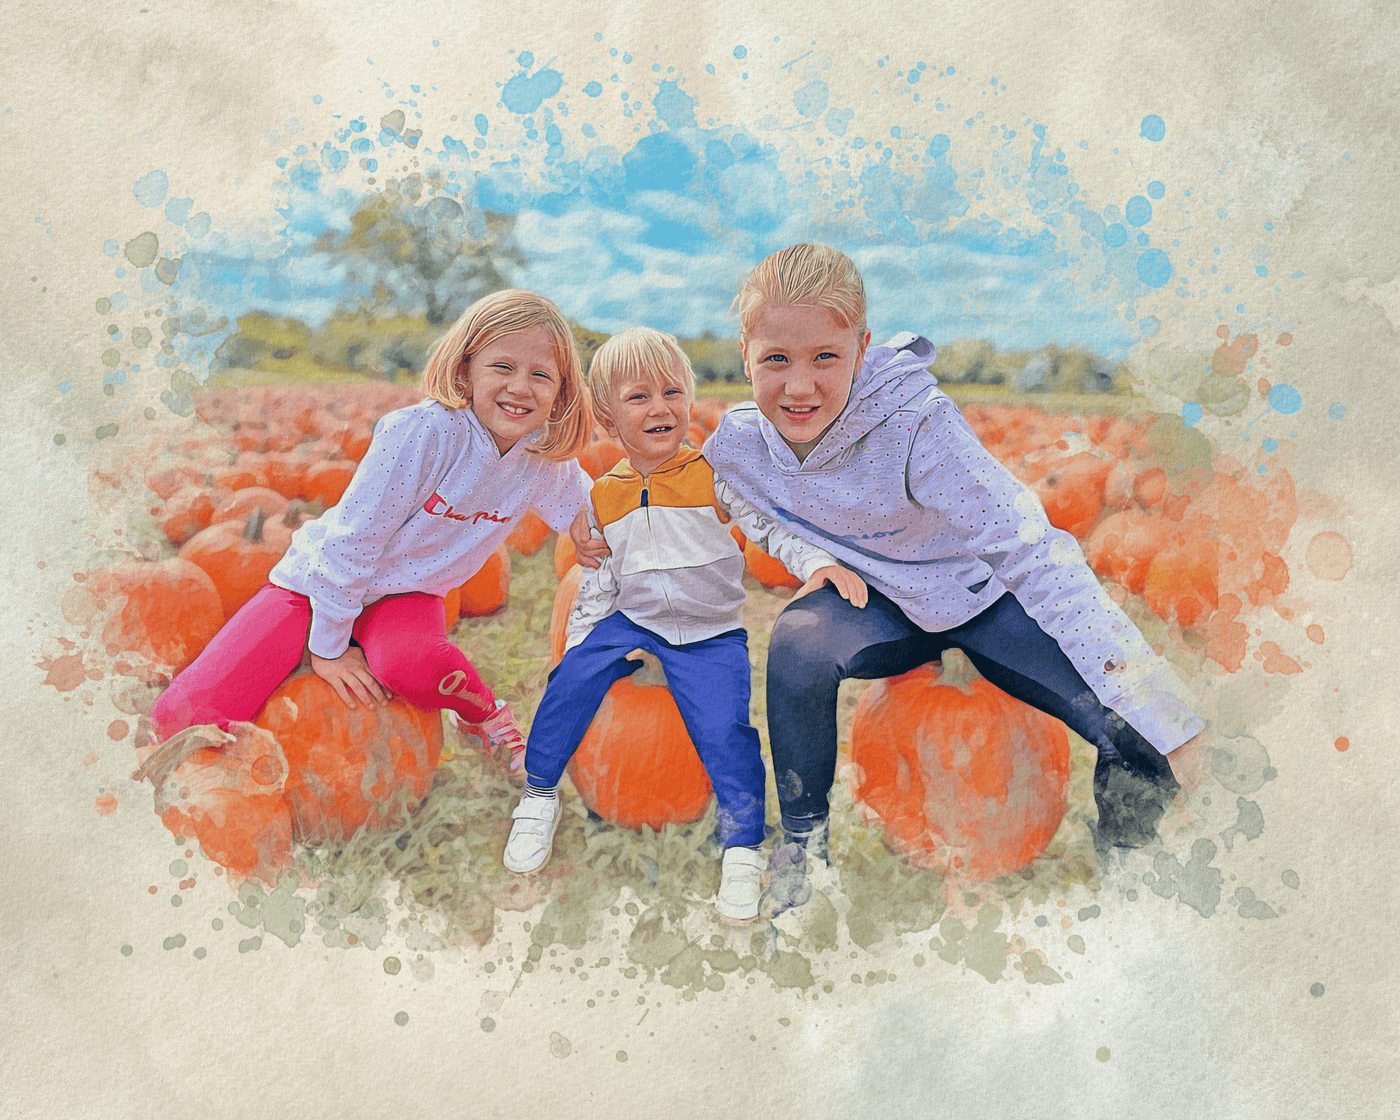 watercolor children portrait of an adorable siblings